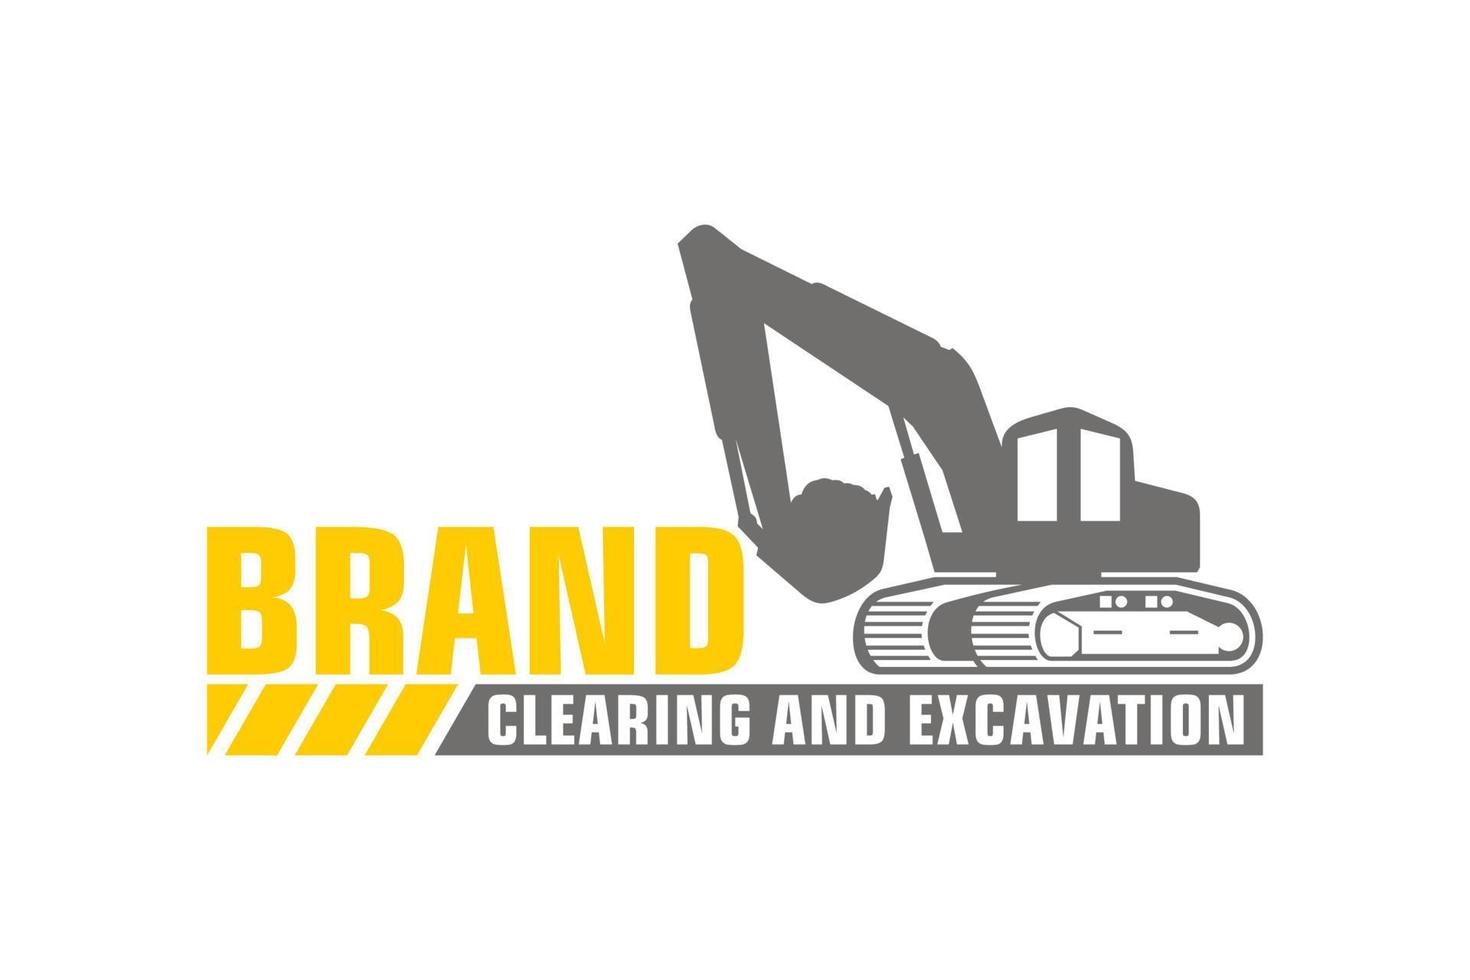 Excavator logo template vector. Heavy equipment logo vector for construction company.